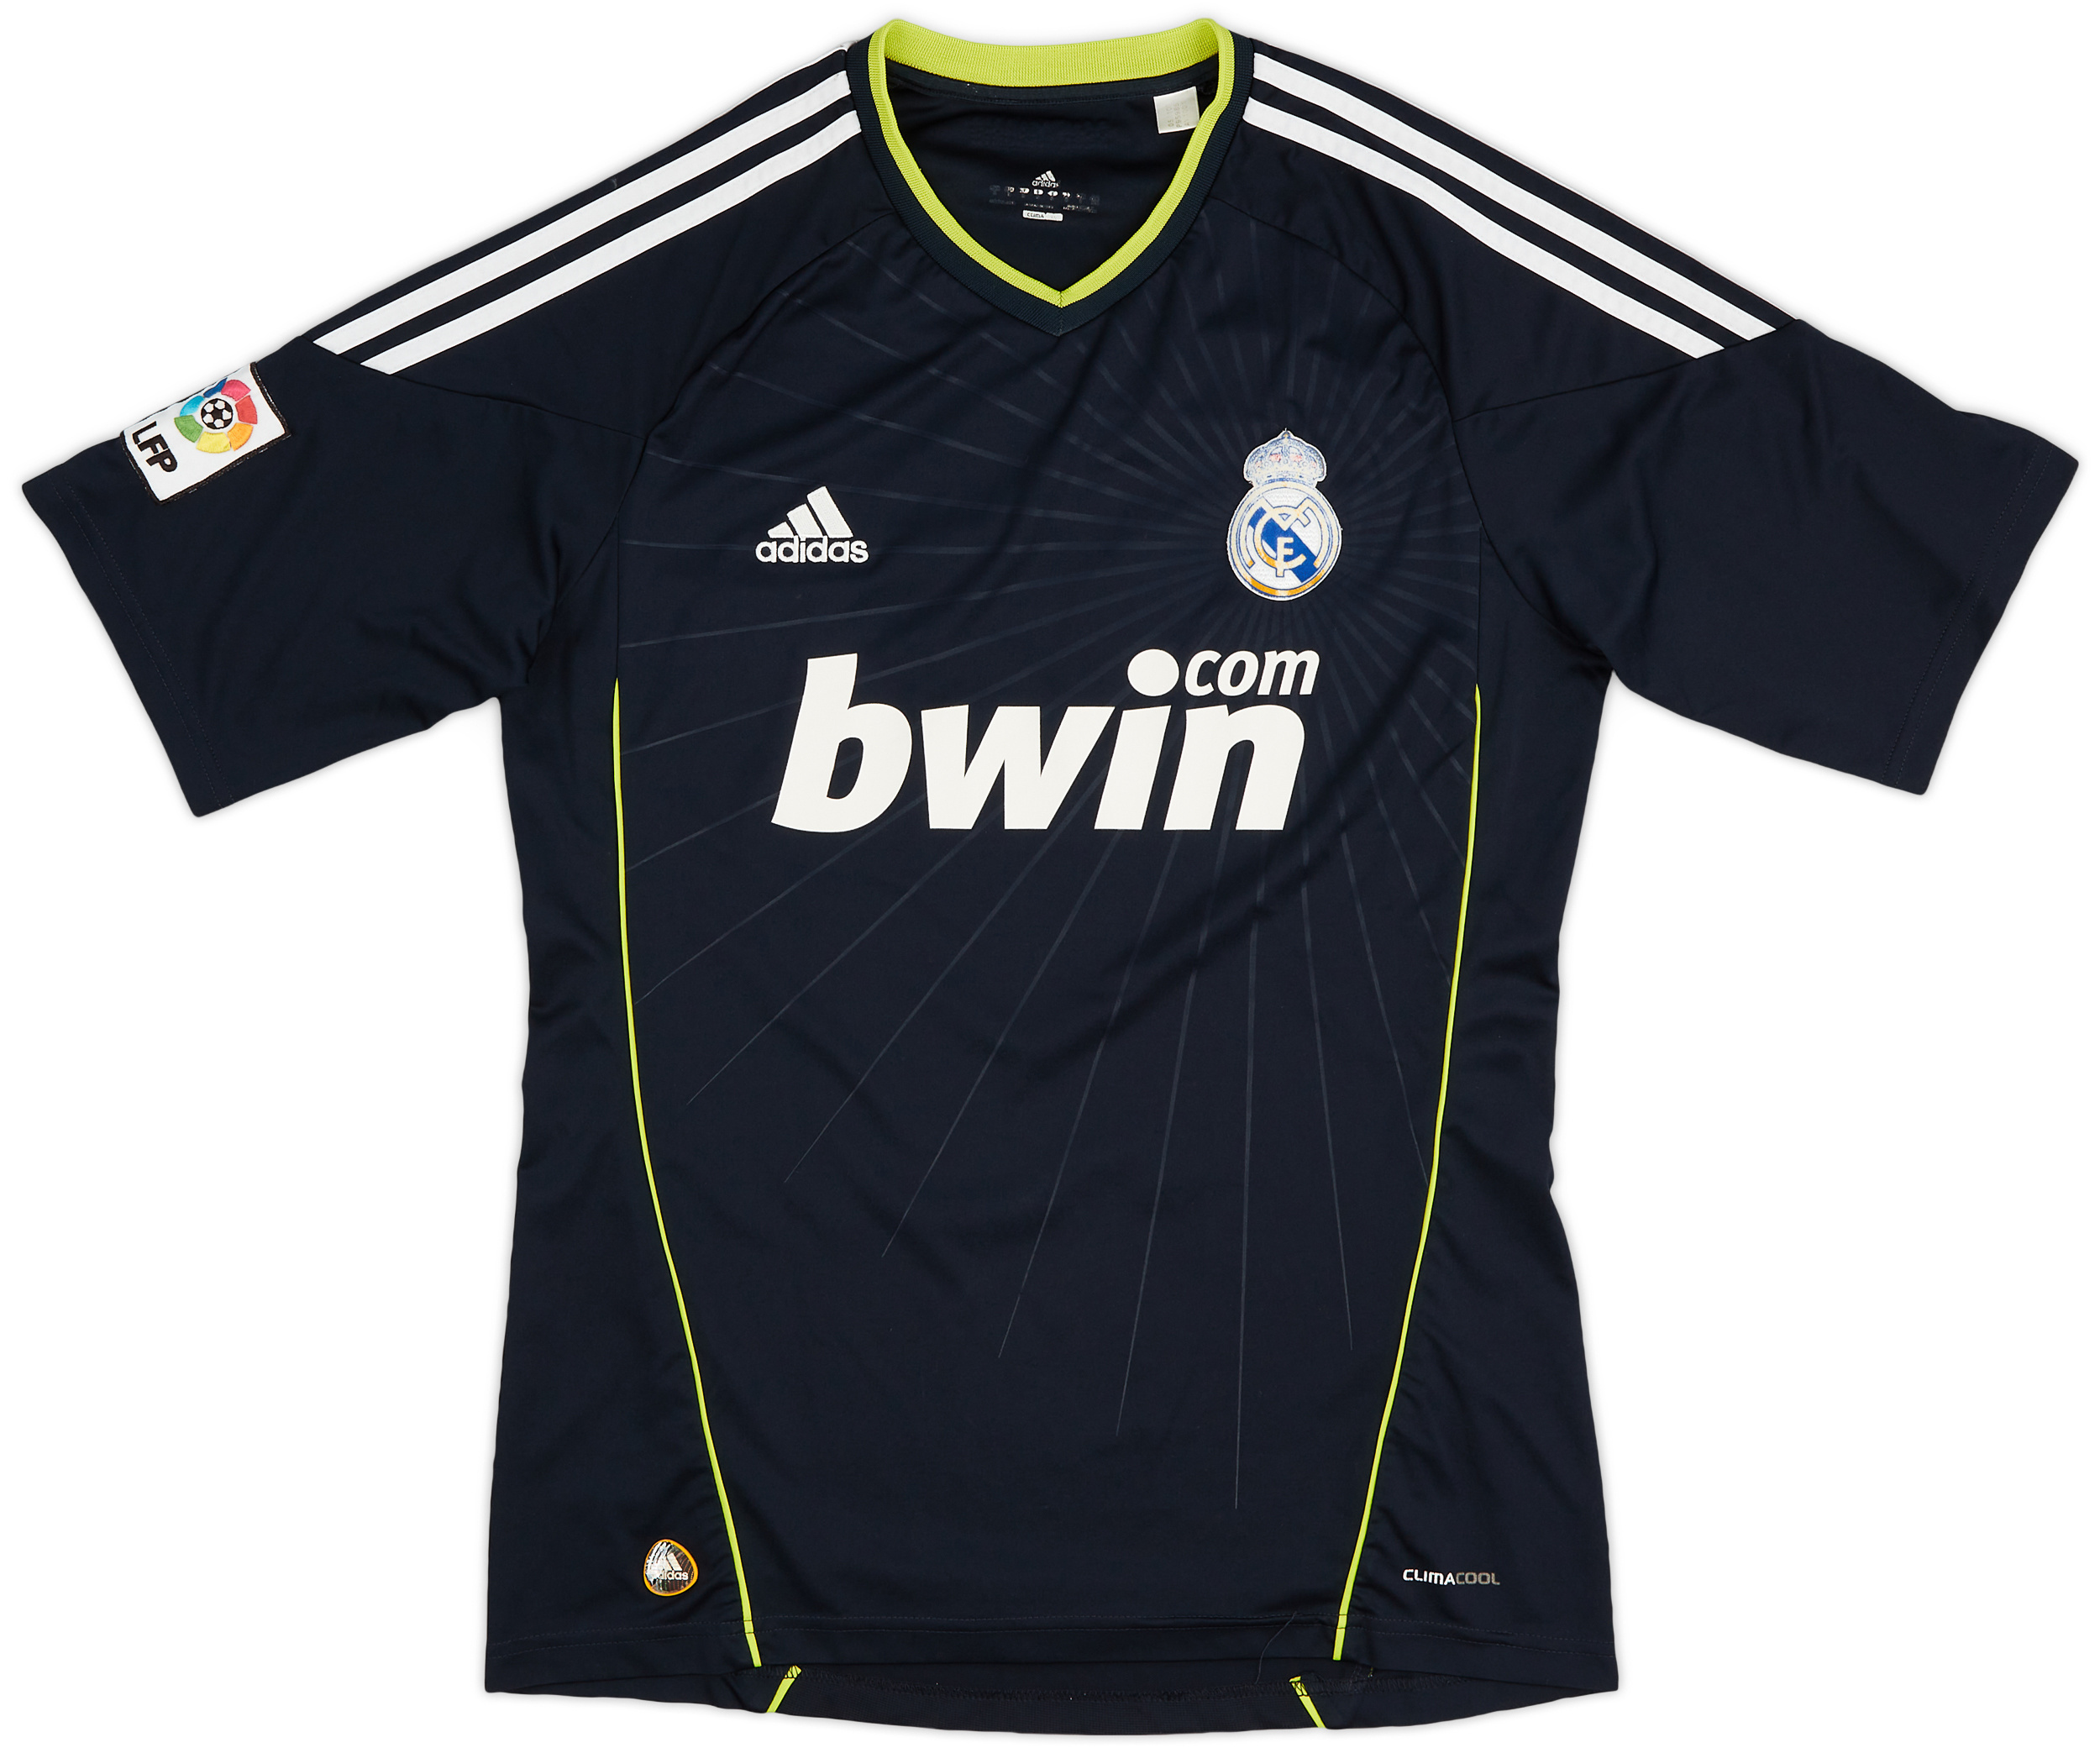 2010-11 Real Madrid Away Shirt - 5/10 - ()